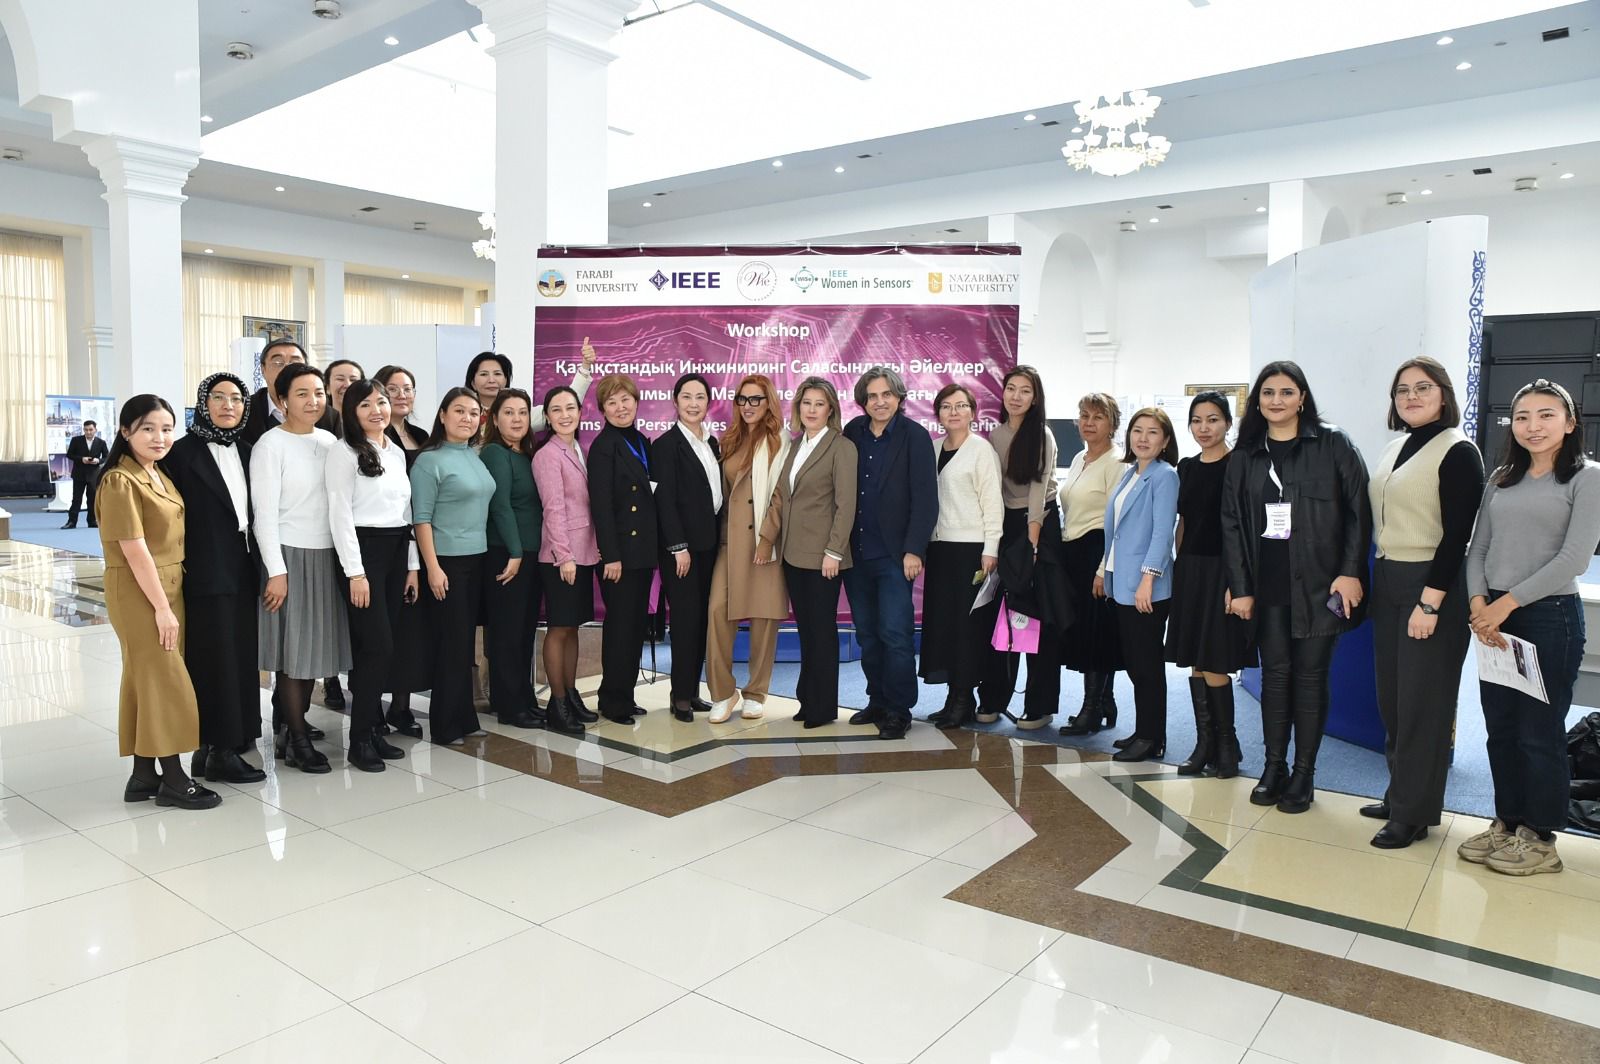 IEEE "Women in Engineering" workshop on "Sustainable Development Goals-5 (gender equality)" was organized